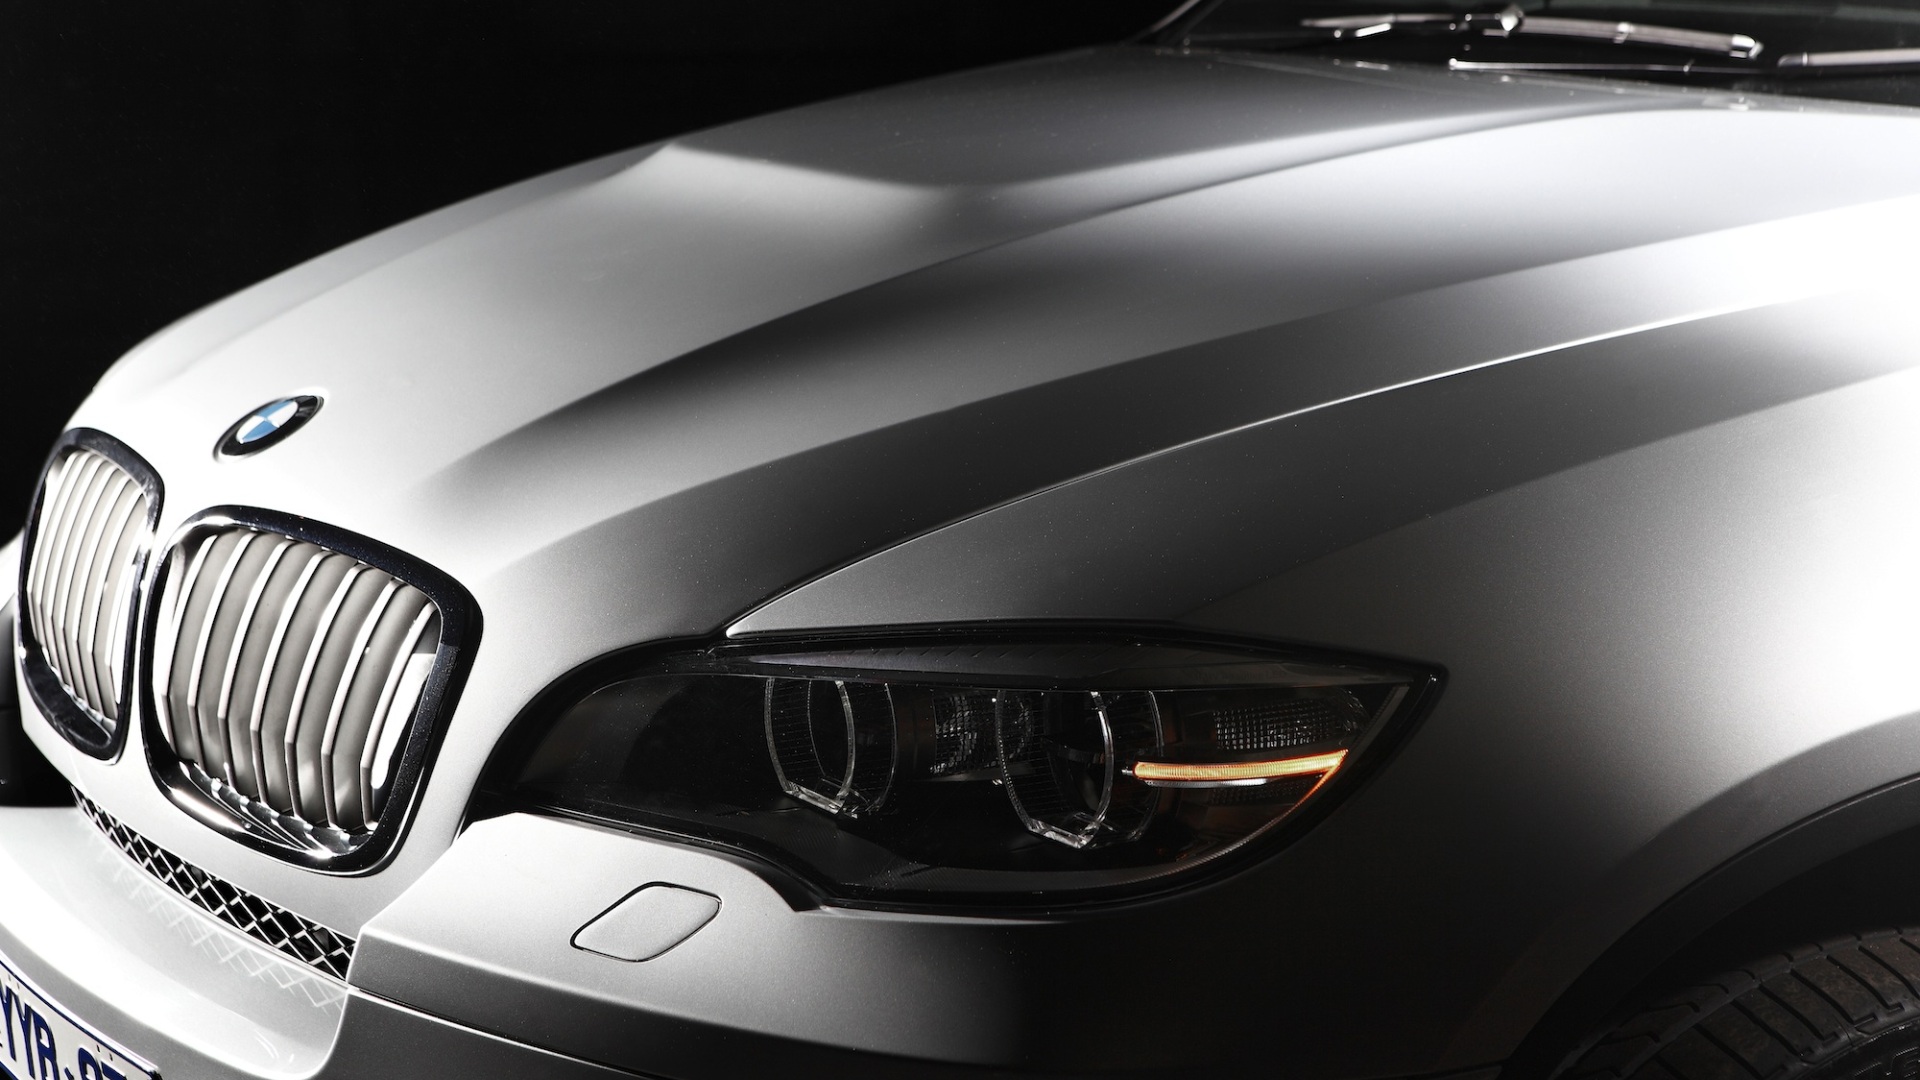 [49+] BMW X6 Wallpaper High Resolution on WallpaperSafari